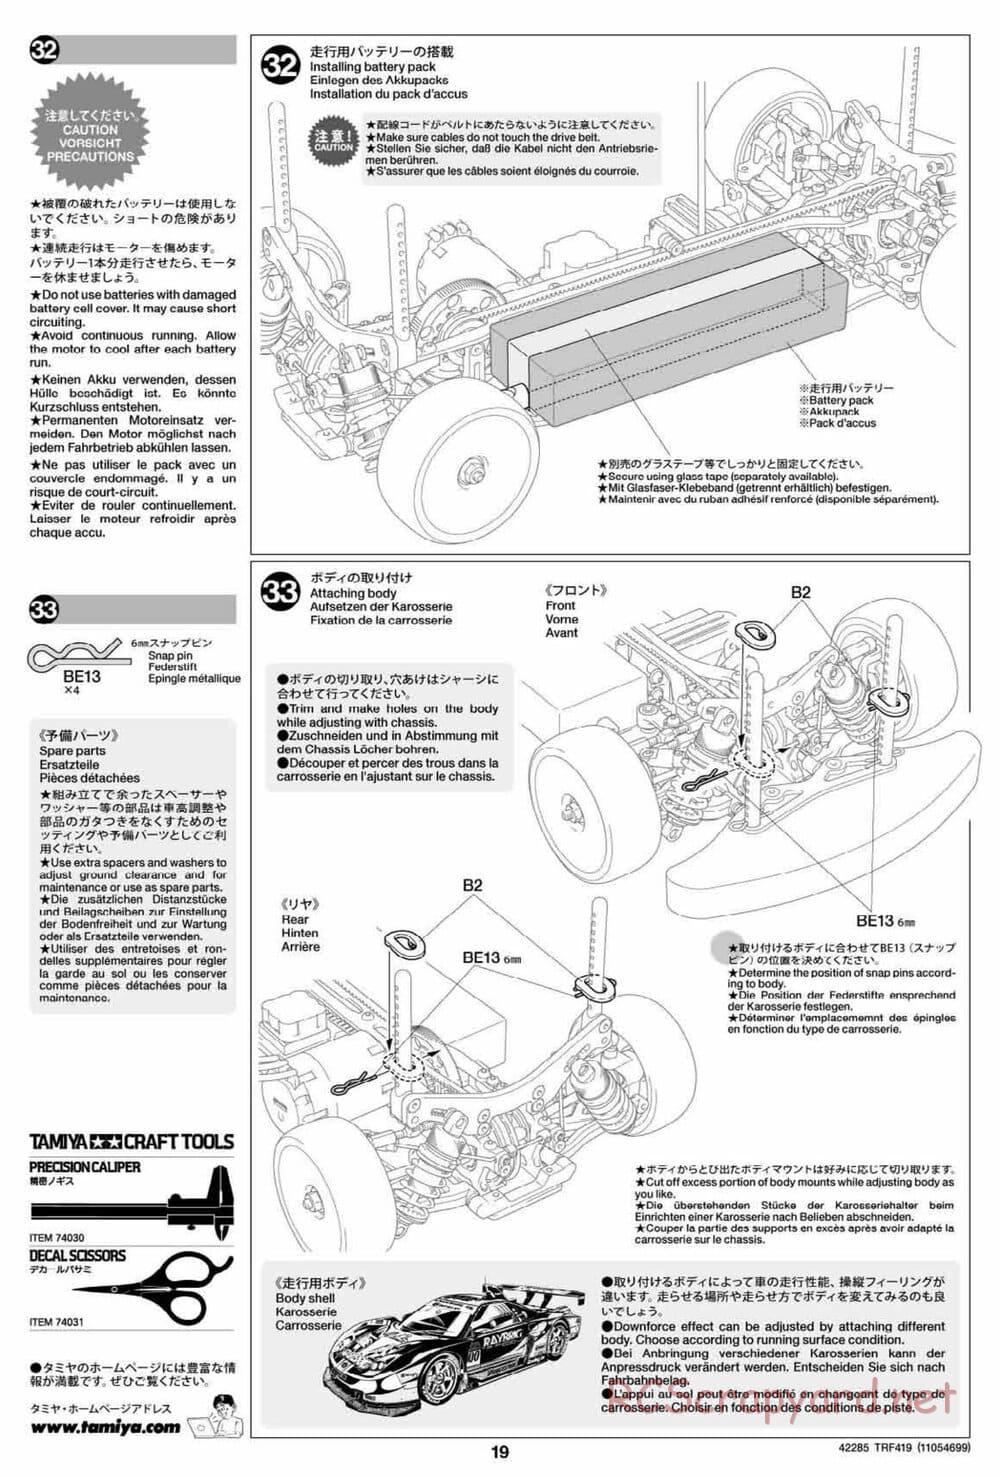 Tamiya - TRF419 Chassis - Manual - Page 19